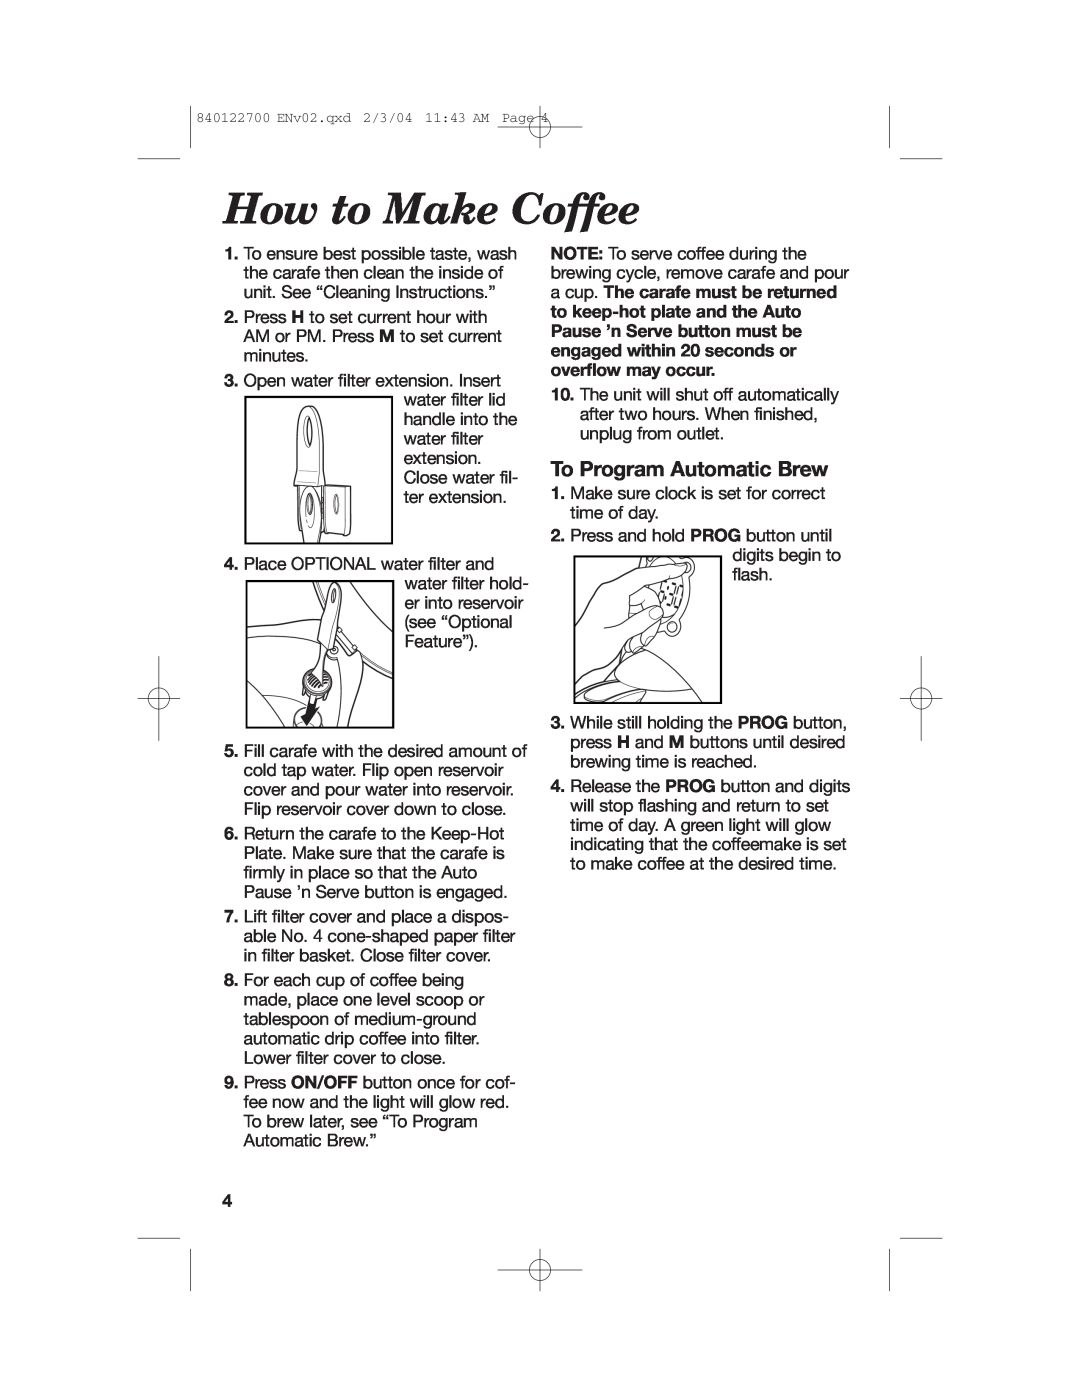 Hamilton Beach Coffemaker manual How to Make Coffee, To Program Automatic Brew 